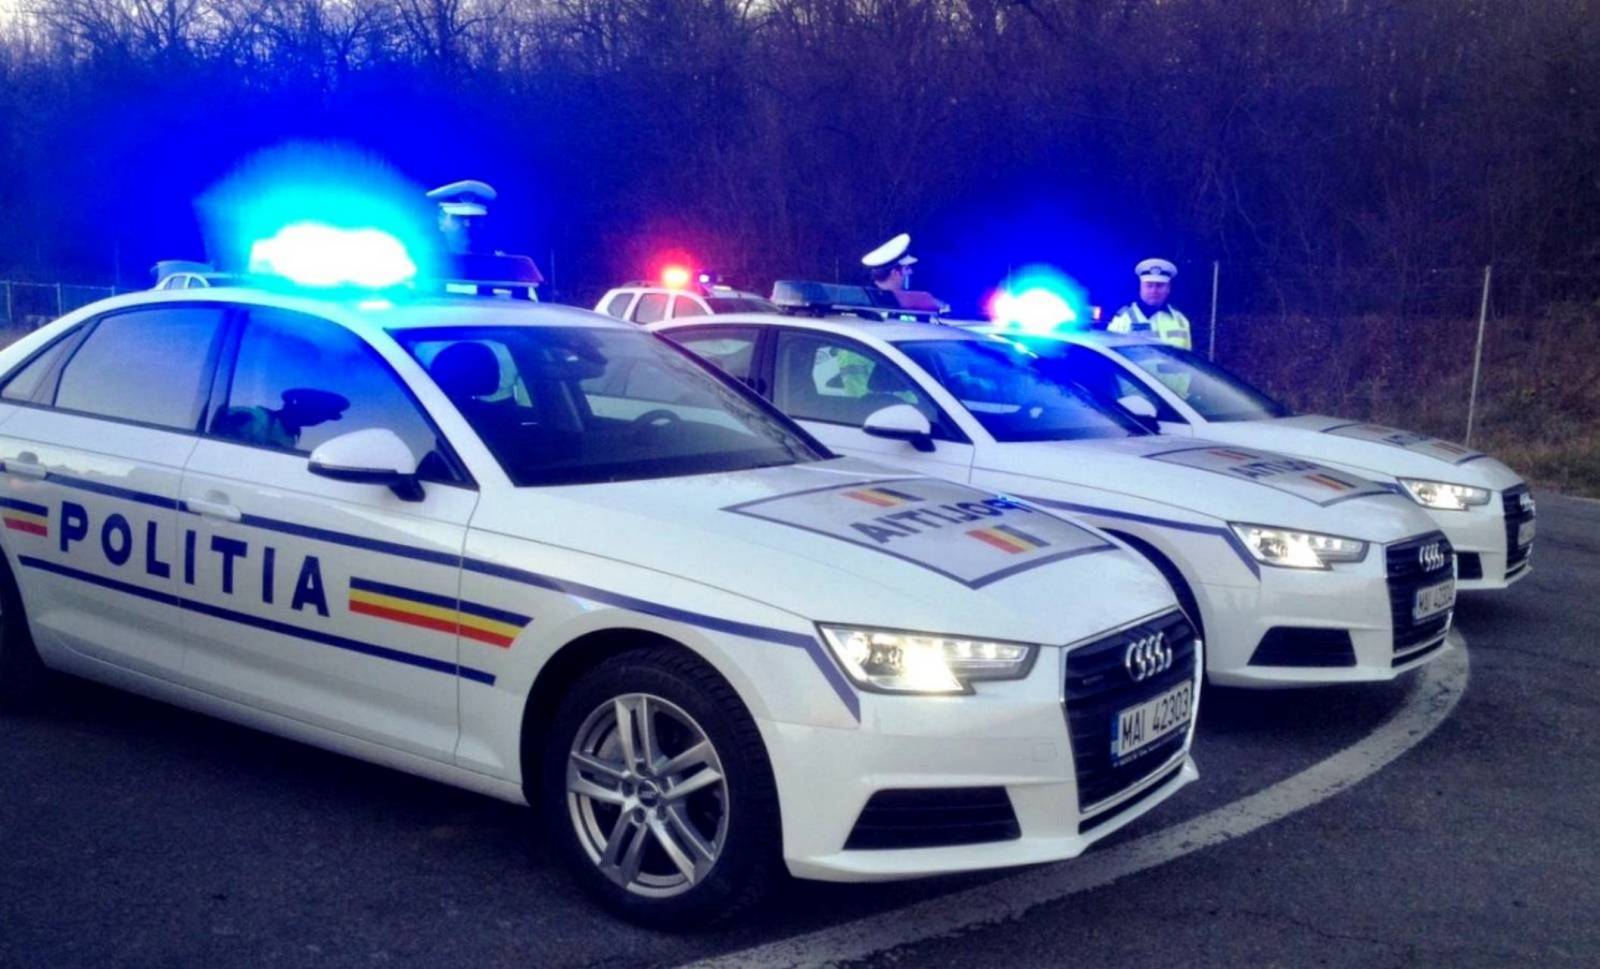 Politia Romana Numar Insemnat Amenzi Cauza COVID-19 Ultimele 24 ore